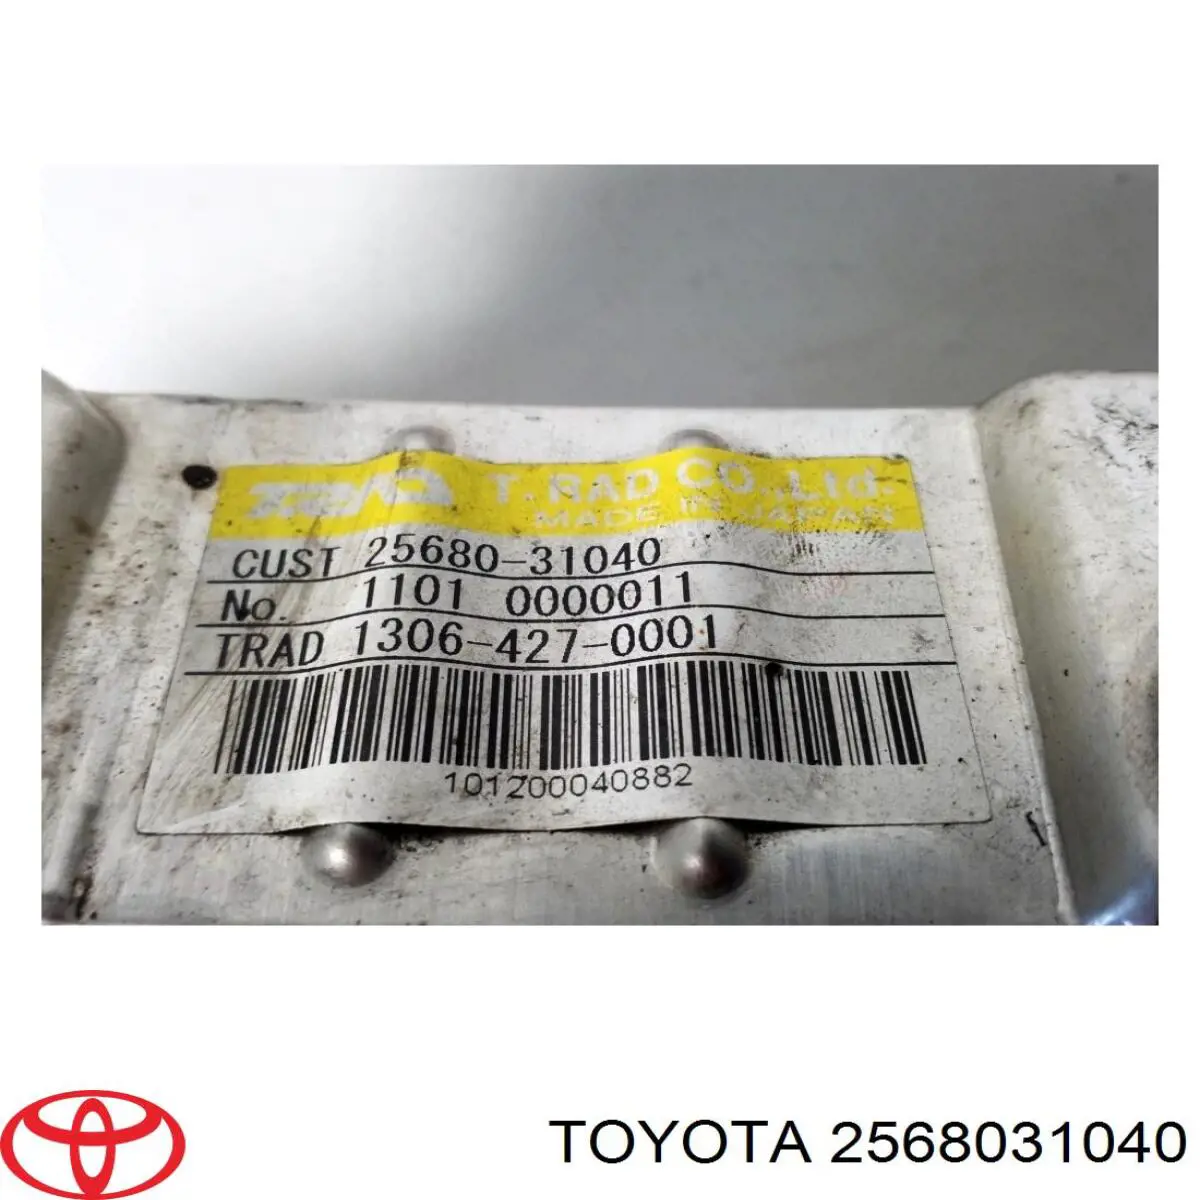 2568031040 Toyota enfriador egr de recirculación de gases de escape